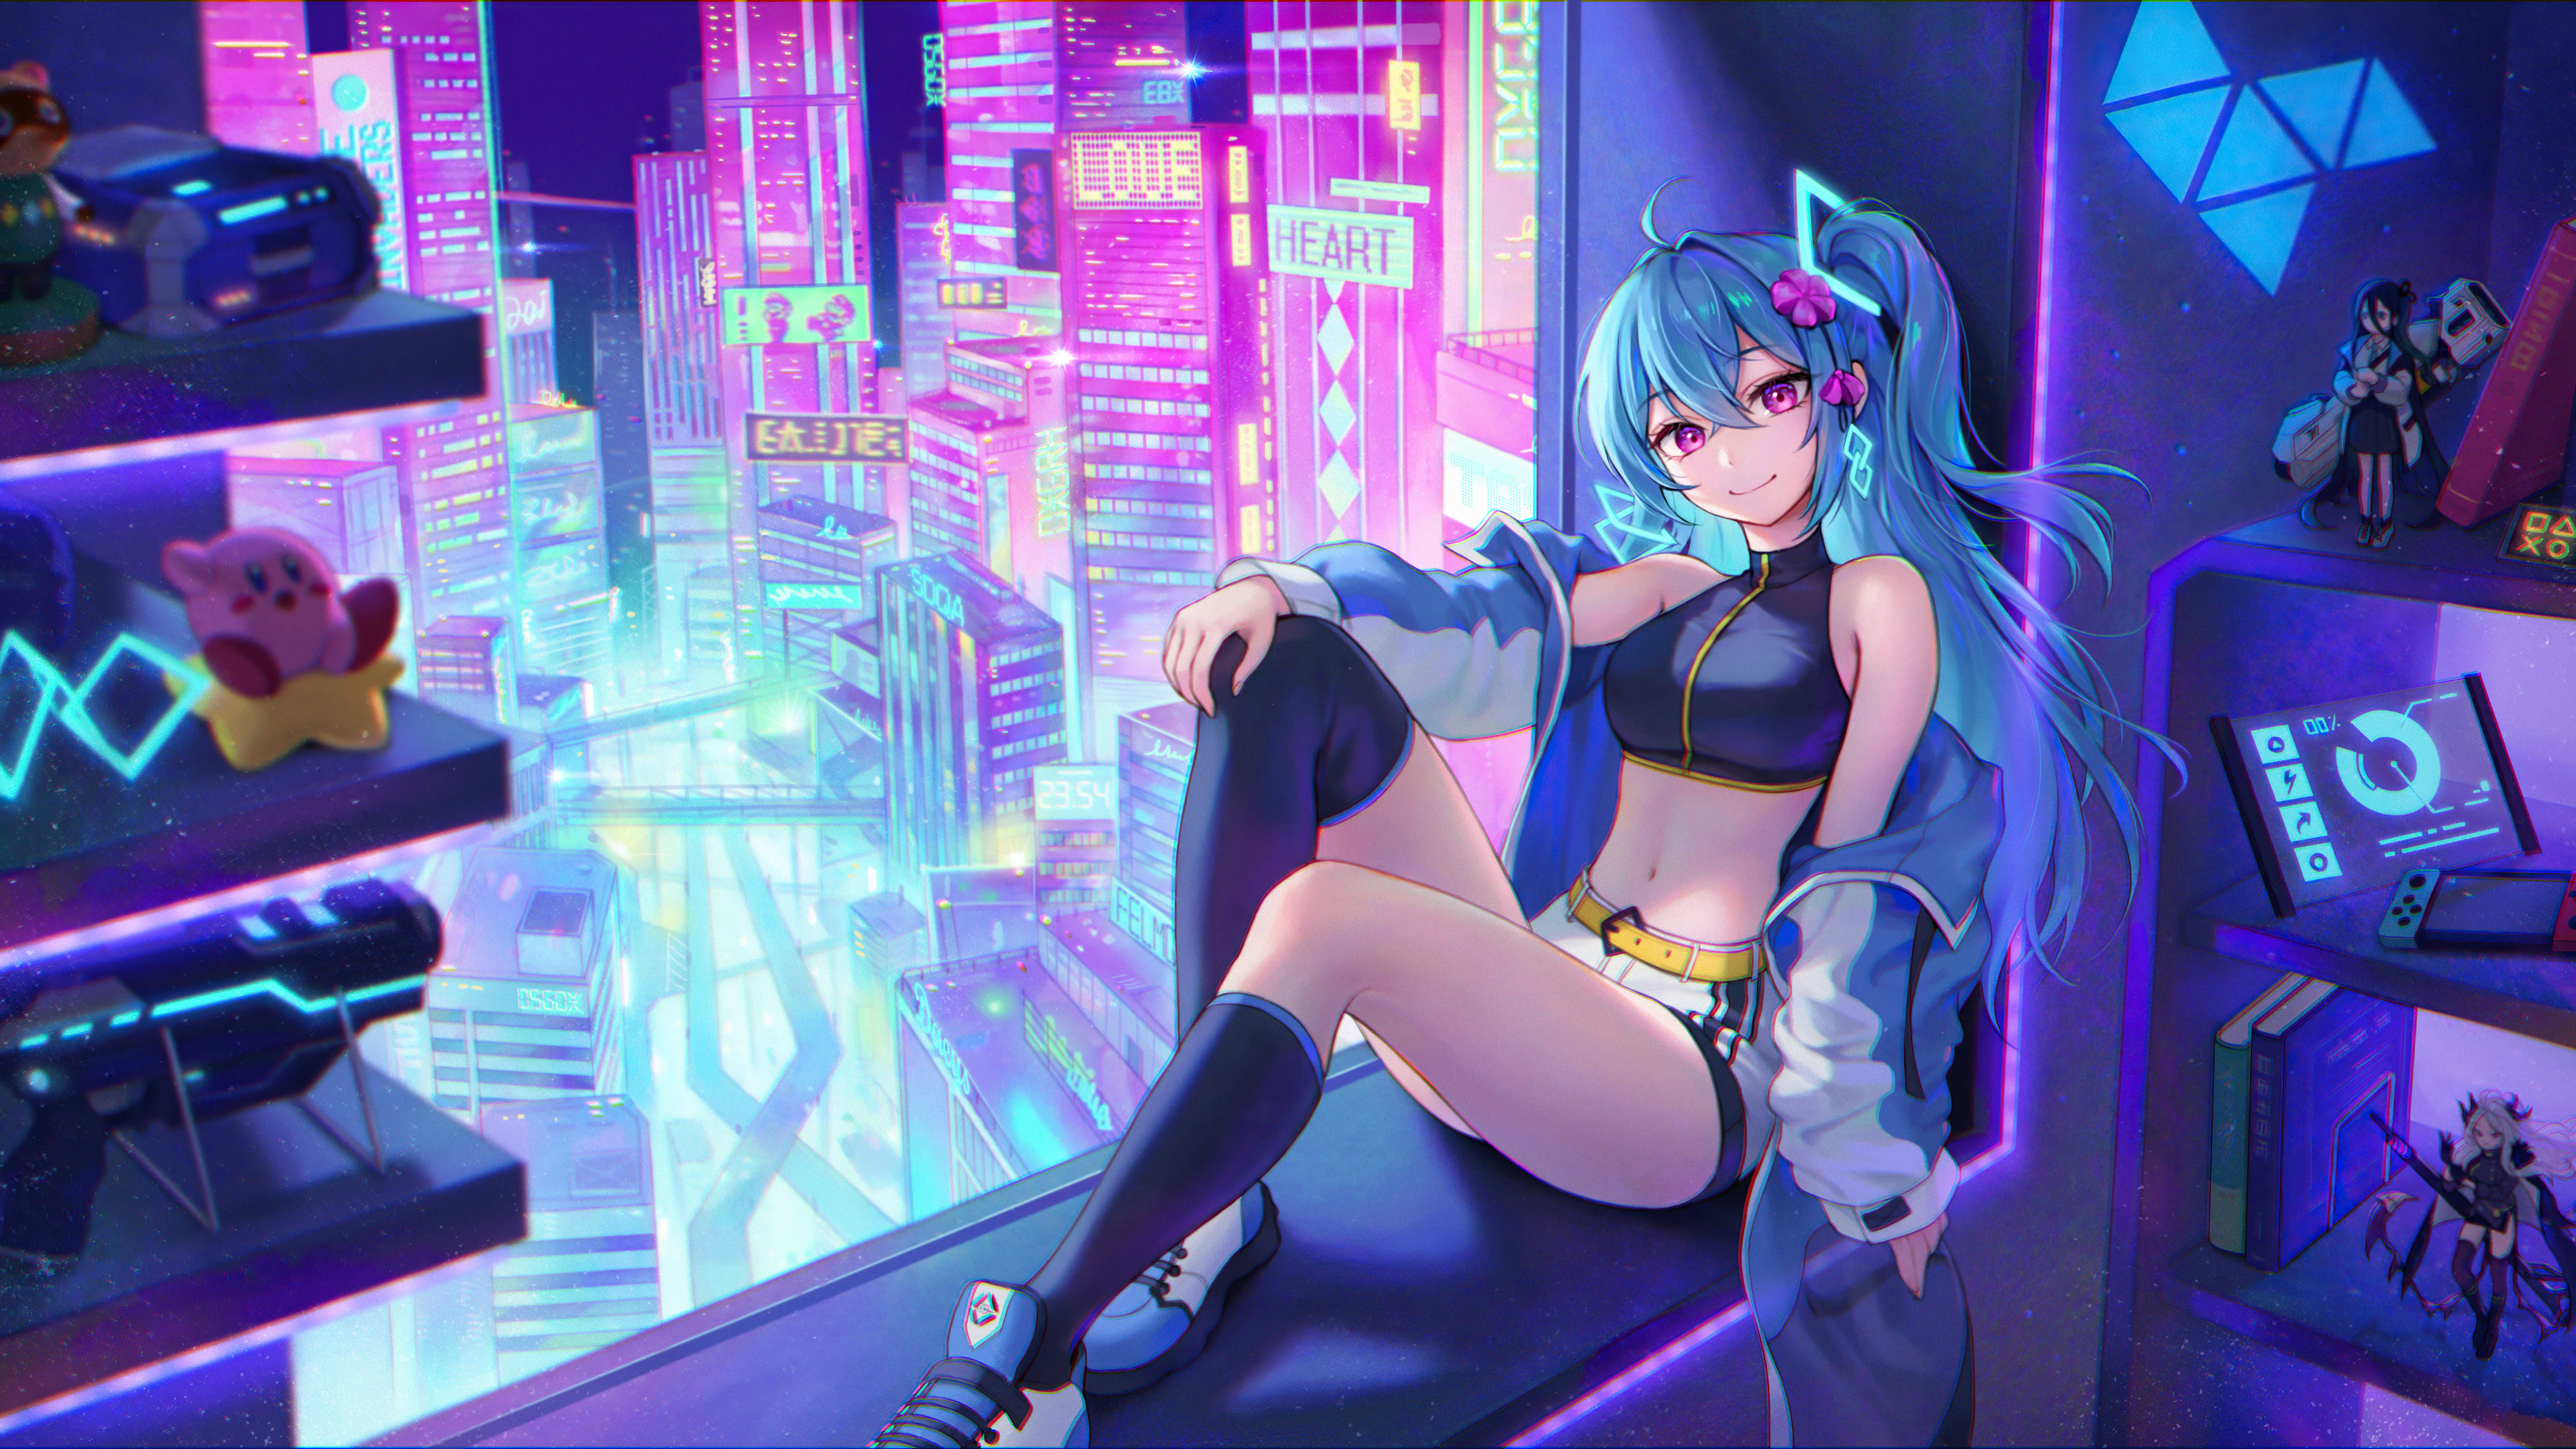 Anime Anime Girls Anaglyphic Blue Hair Smiling Purple Eyes City Lights City Nintendo Switch Figurine 5120x2880